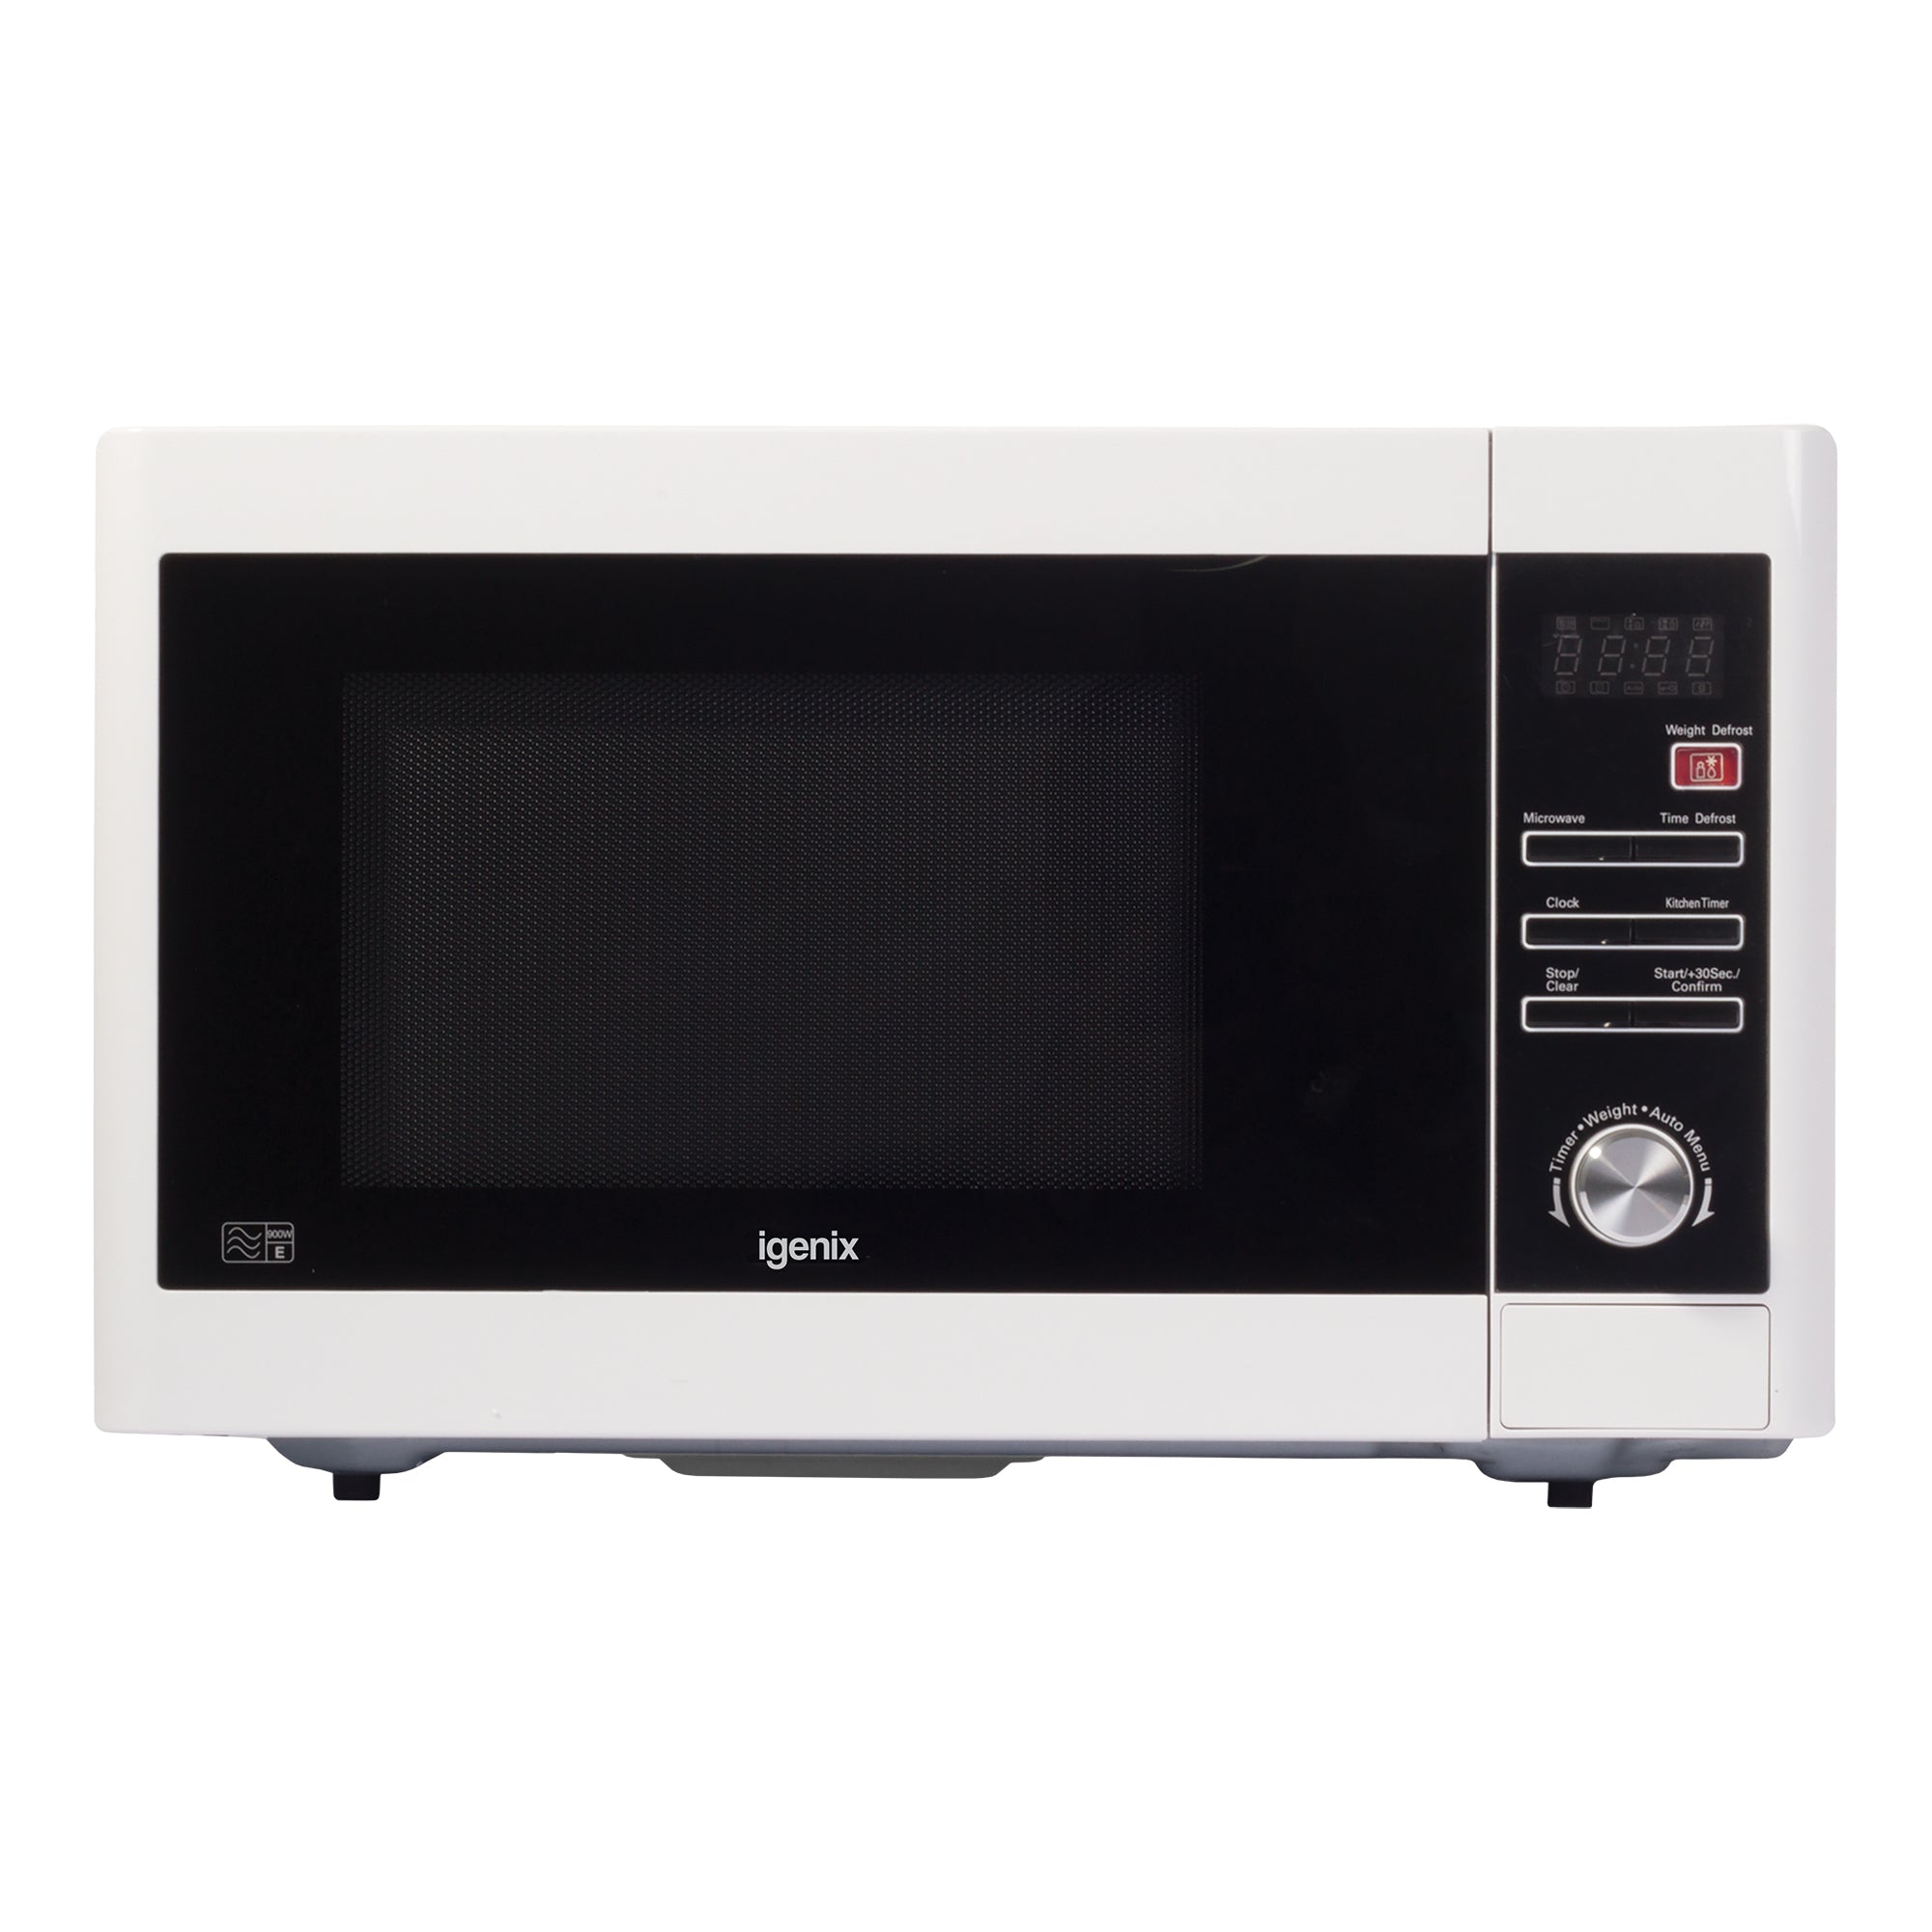 Digital Microwave, 30 Litre, 900W, White